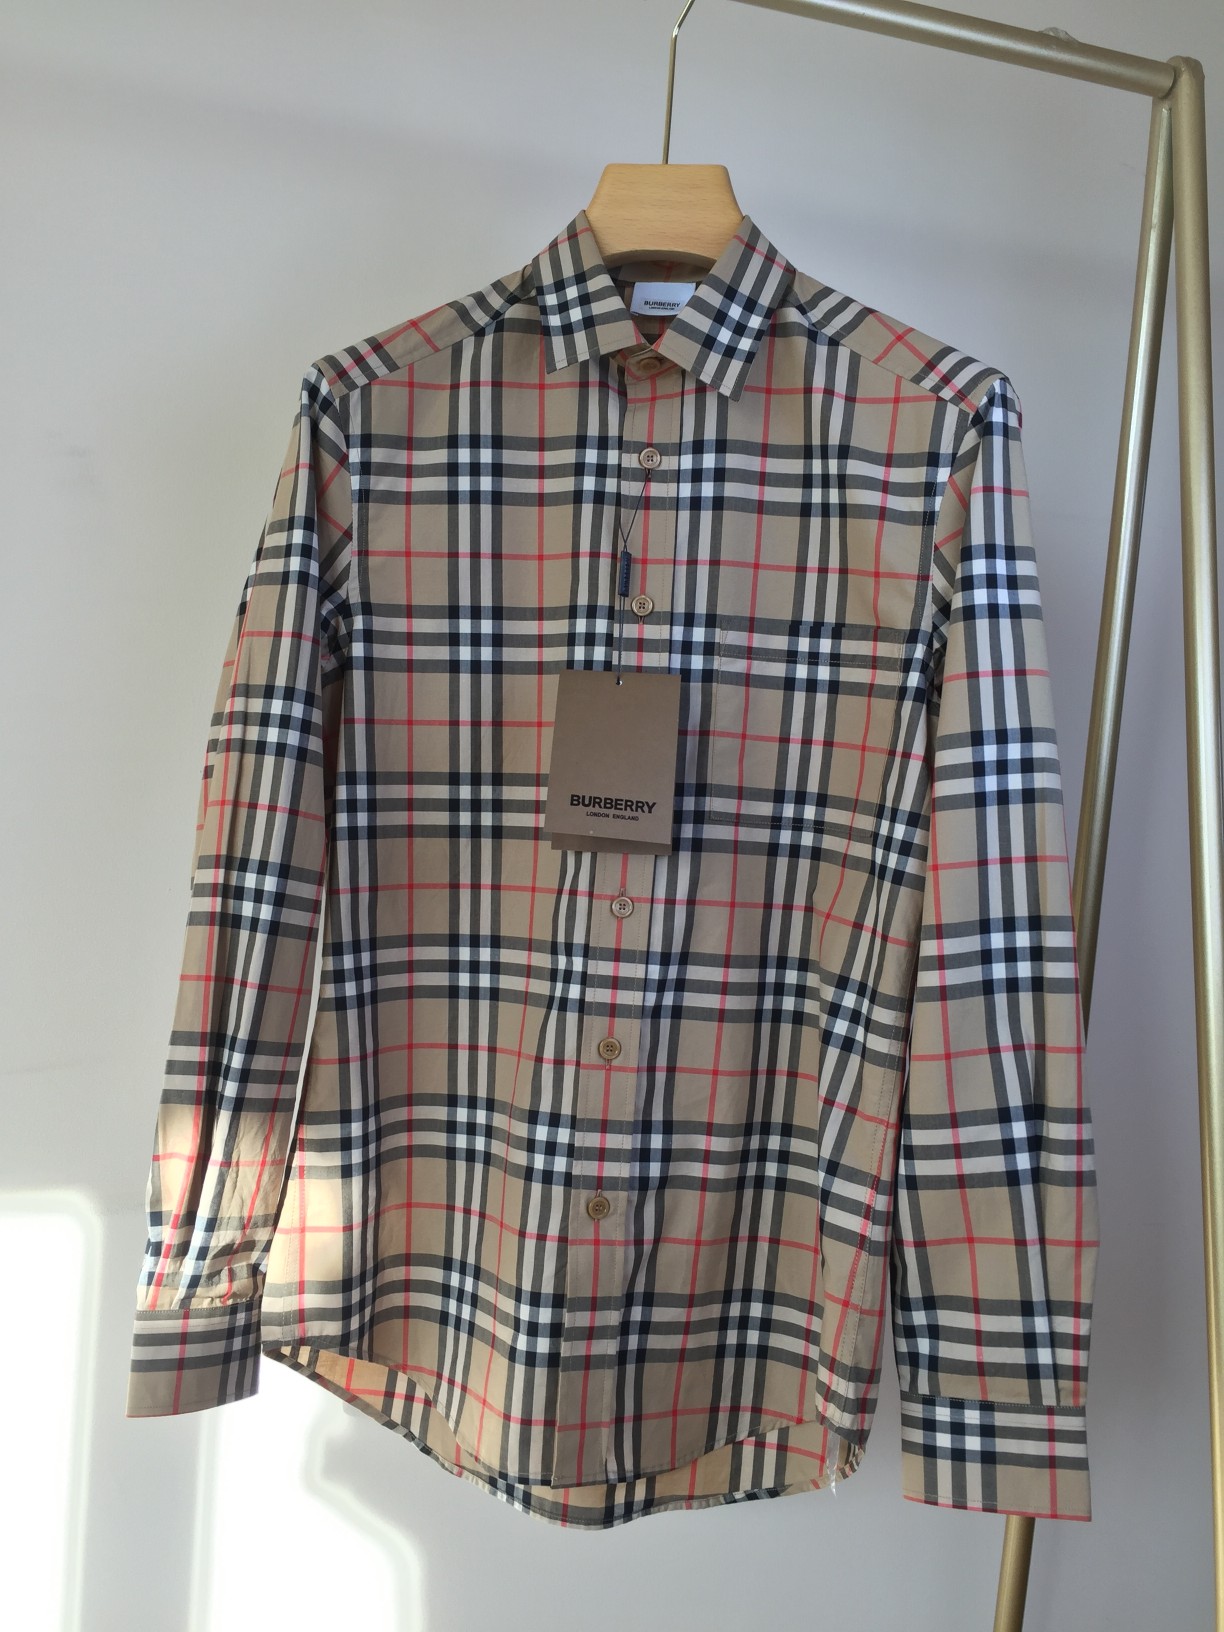 Burberry Clothing Shirts & Blouses Embroidery Unisex Fashion